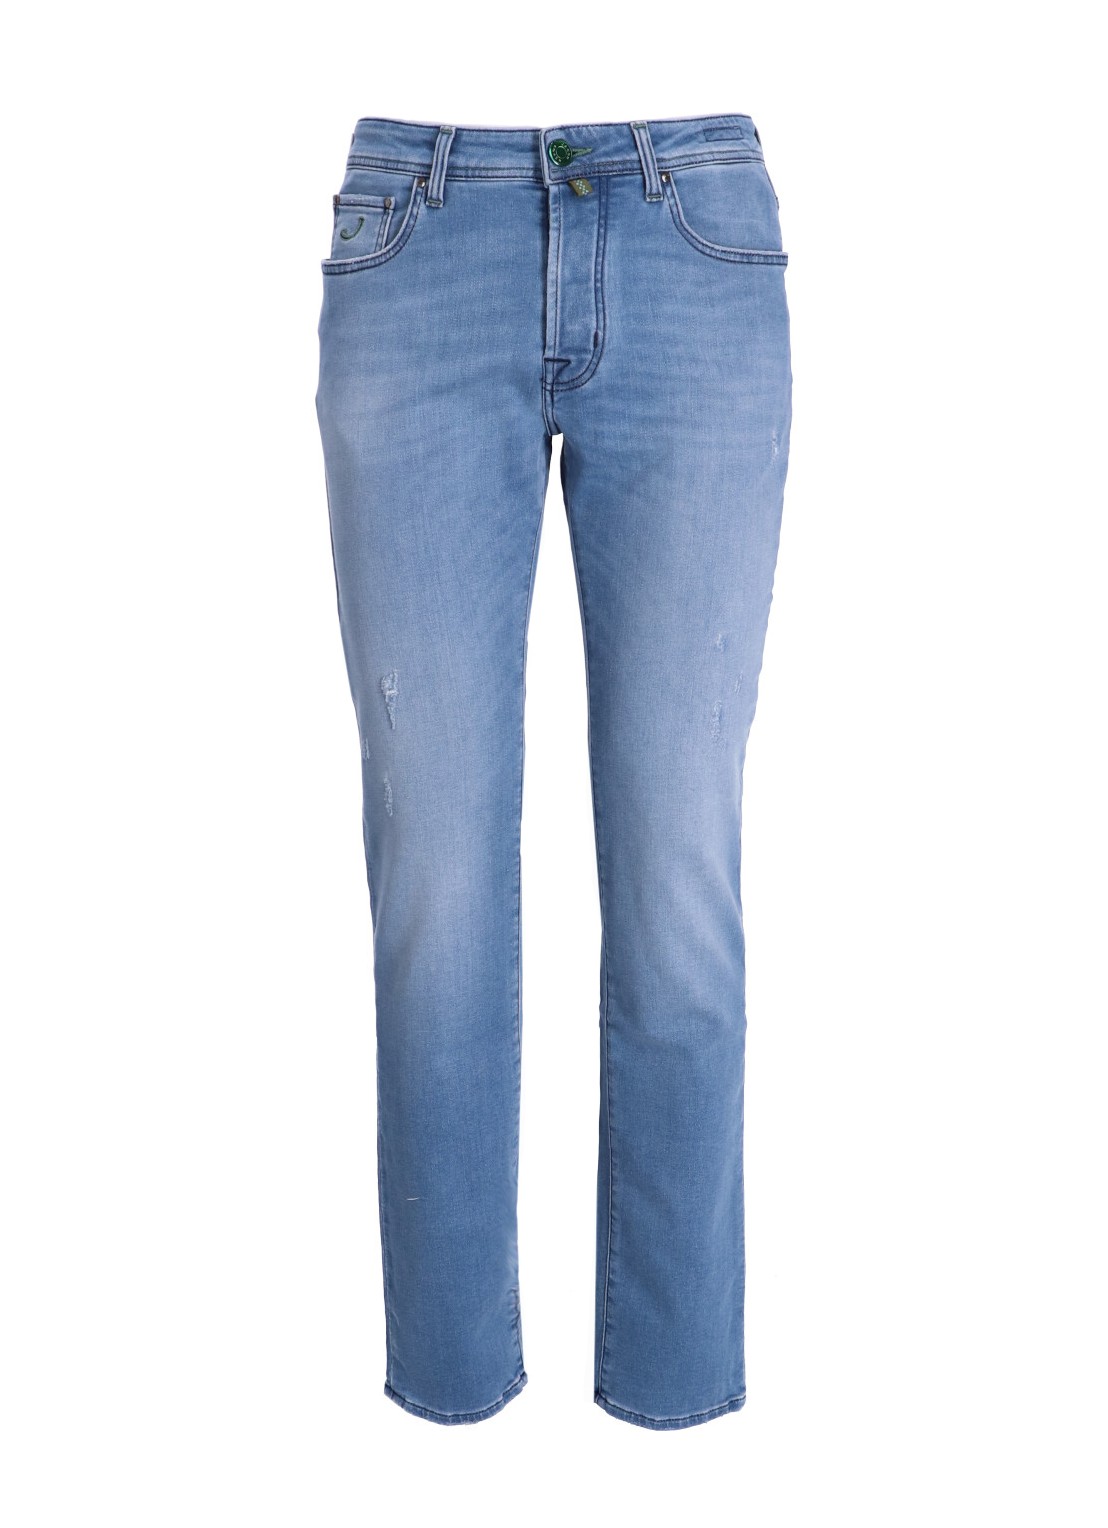 Pantalon jeans jacob cohen denim manpant 5 pkt slim fit bard - uqe0434p3588 731d talla 35
 